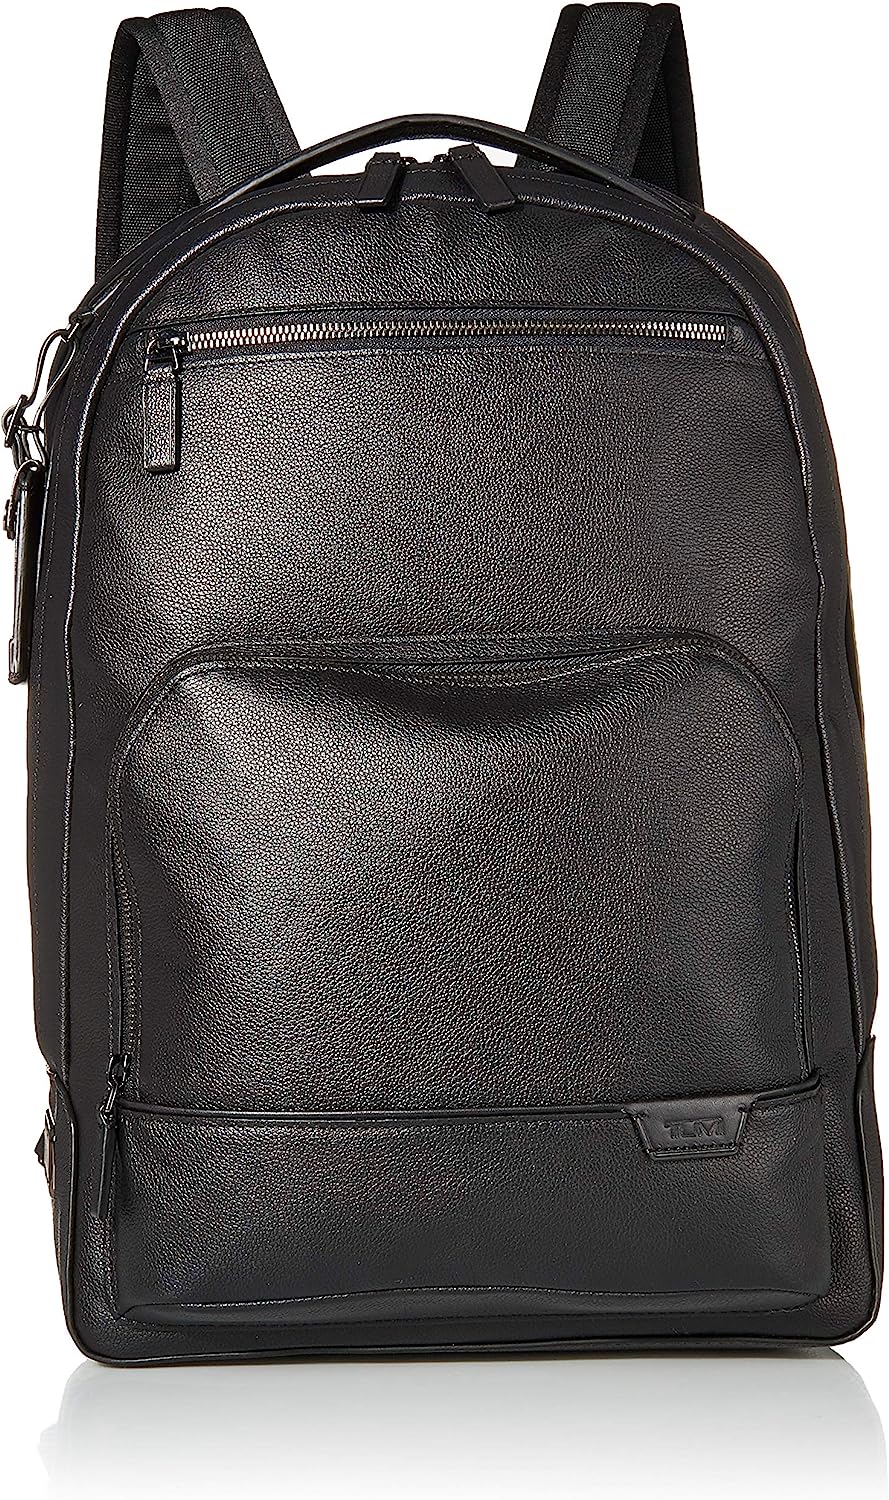 TUMI - Harrison Warren Leather Laptop Backpack - 15 Inch Computer Bag for Men and Women - Black
